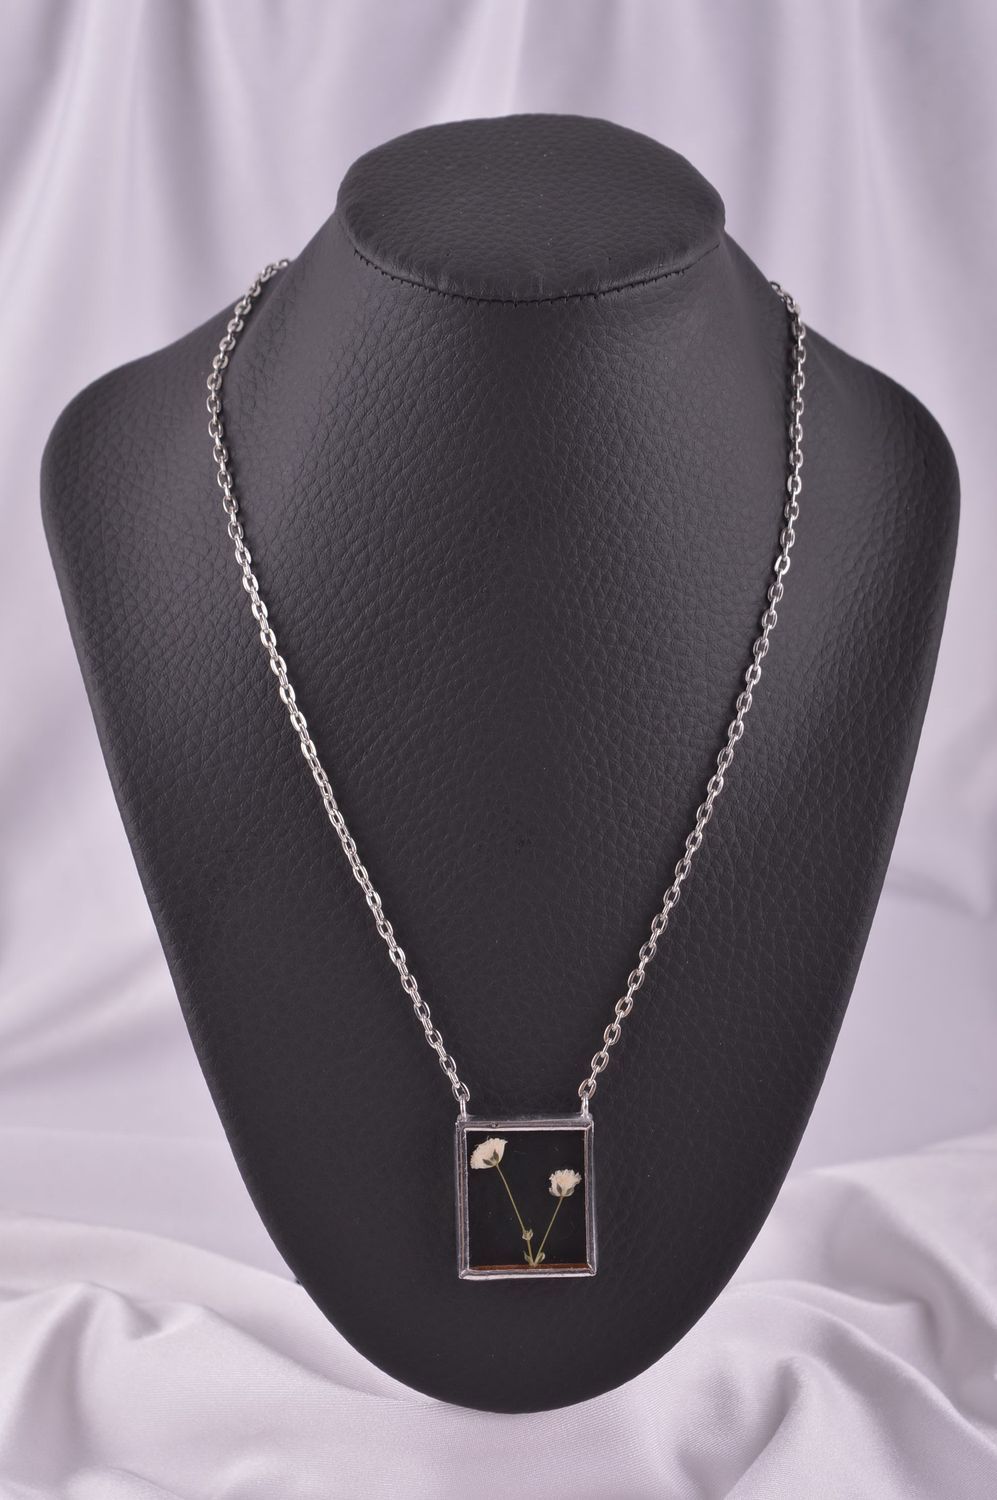 Stylish handmade neck pendant glass pendant artisan jewelry designs gift ideas photo 1